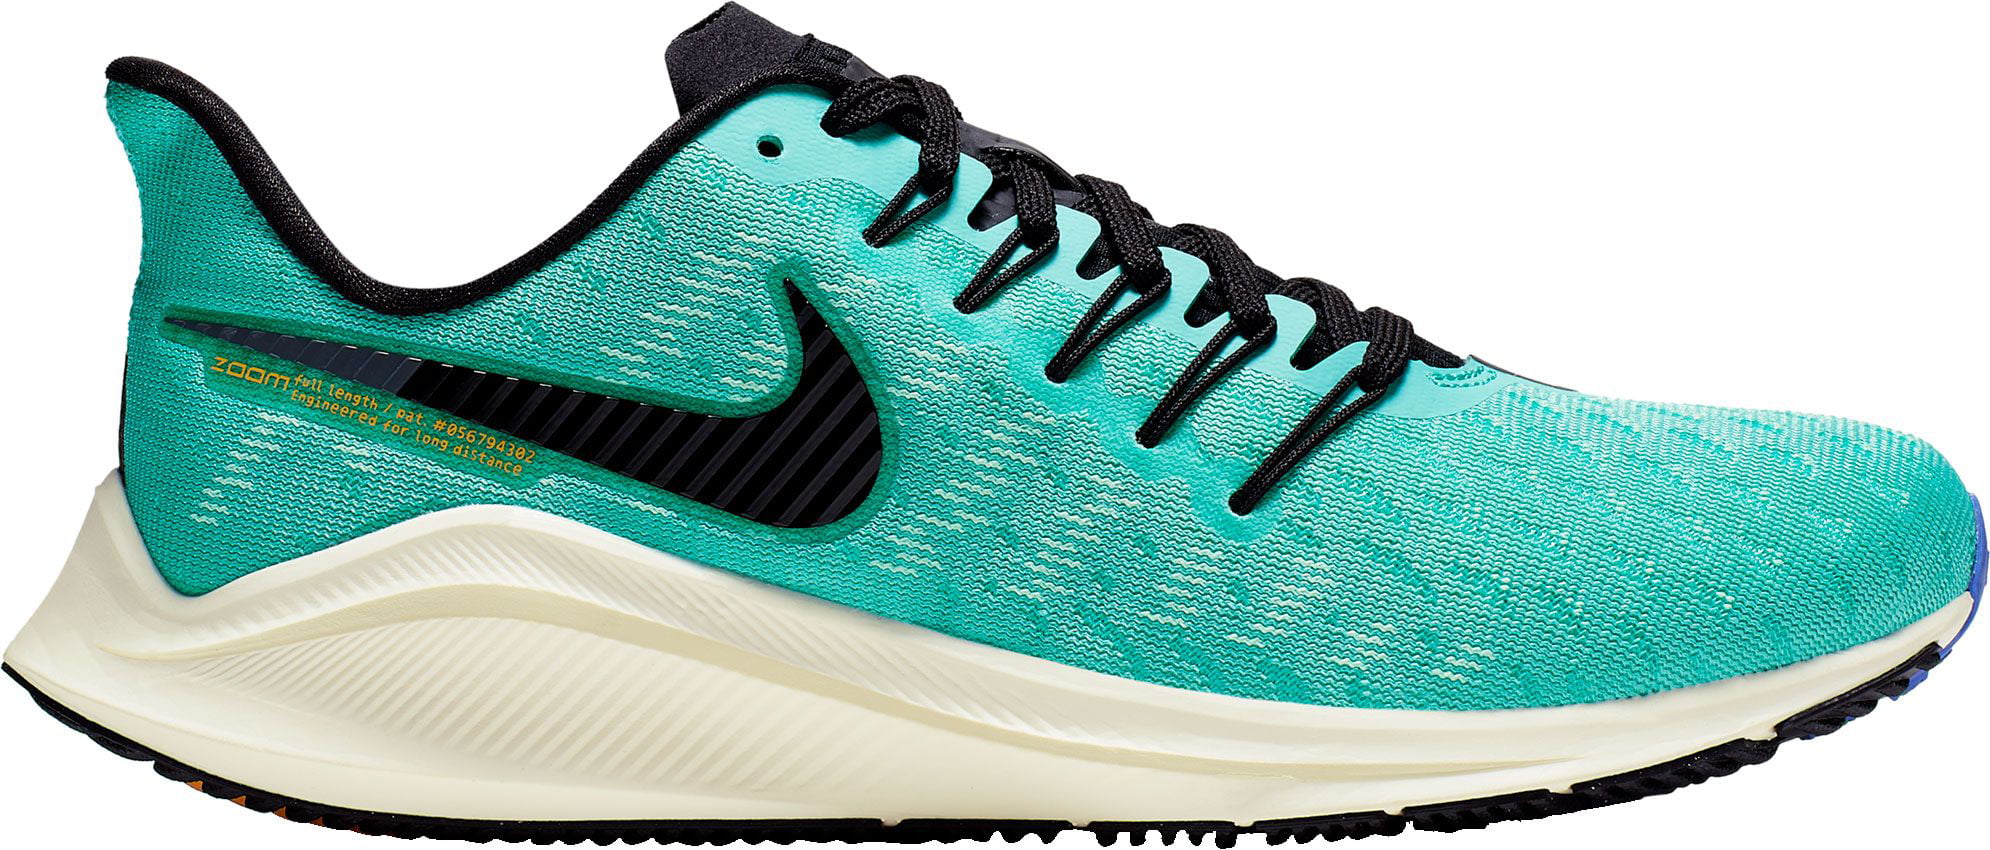 Nike - Nike Women's Air Zoom Vomero 14 Running Shoes - Walmart.com ...